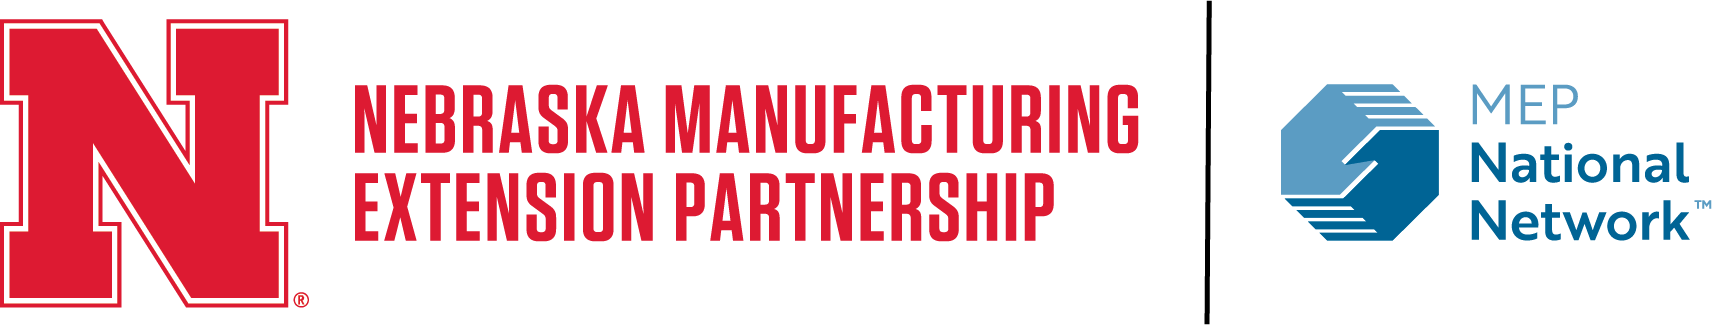 Nebraska Manufacturing Extension Partnership Logo